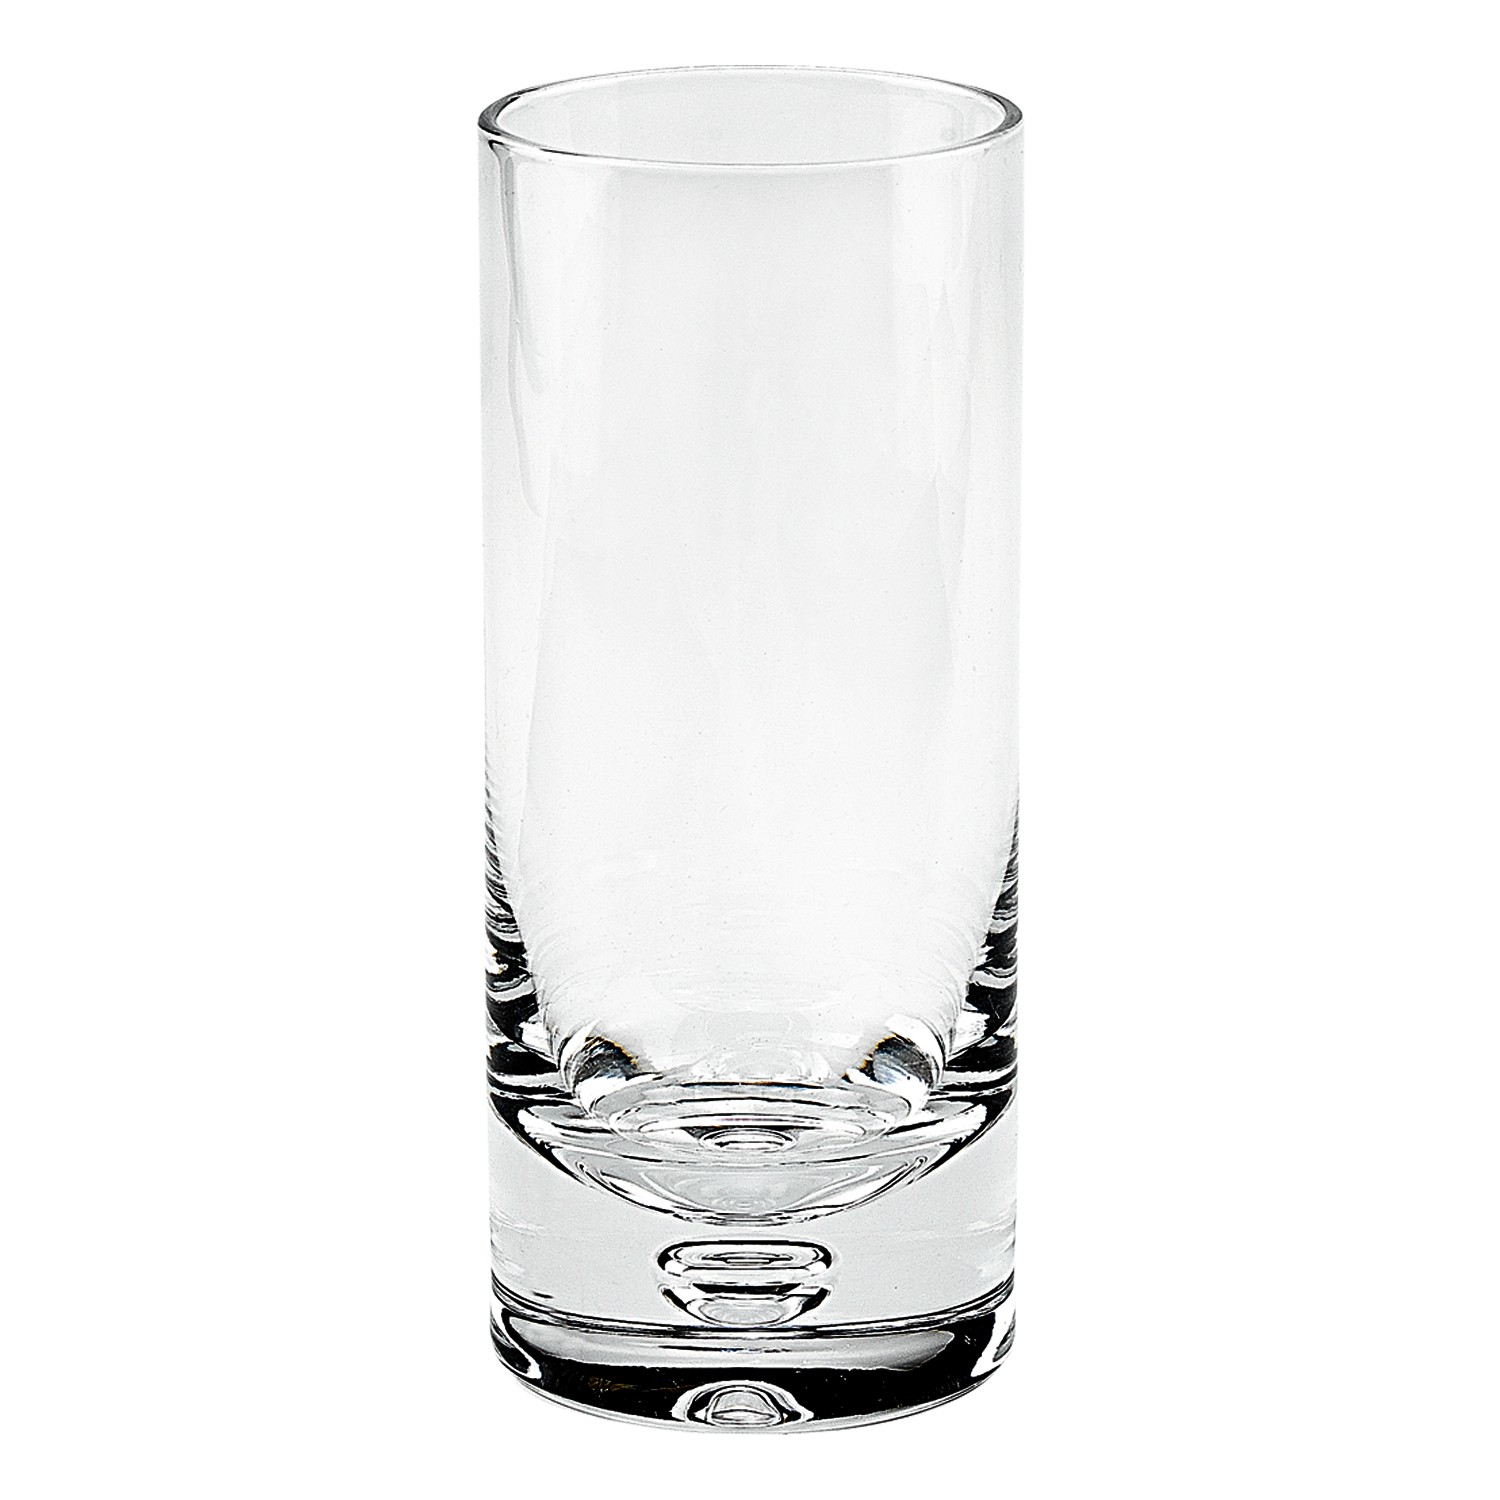 Mouth Blown Crystal Lead Free Hiball Glass -13 oz - 4 pc Set